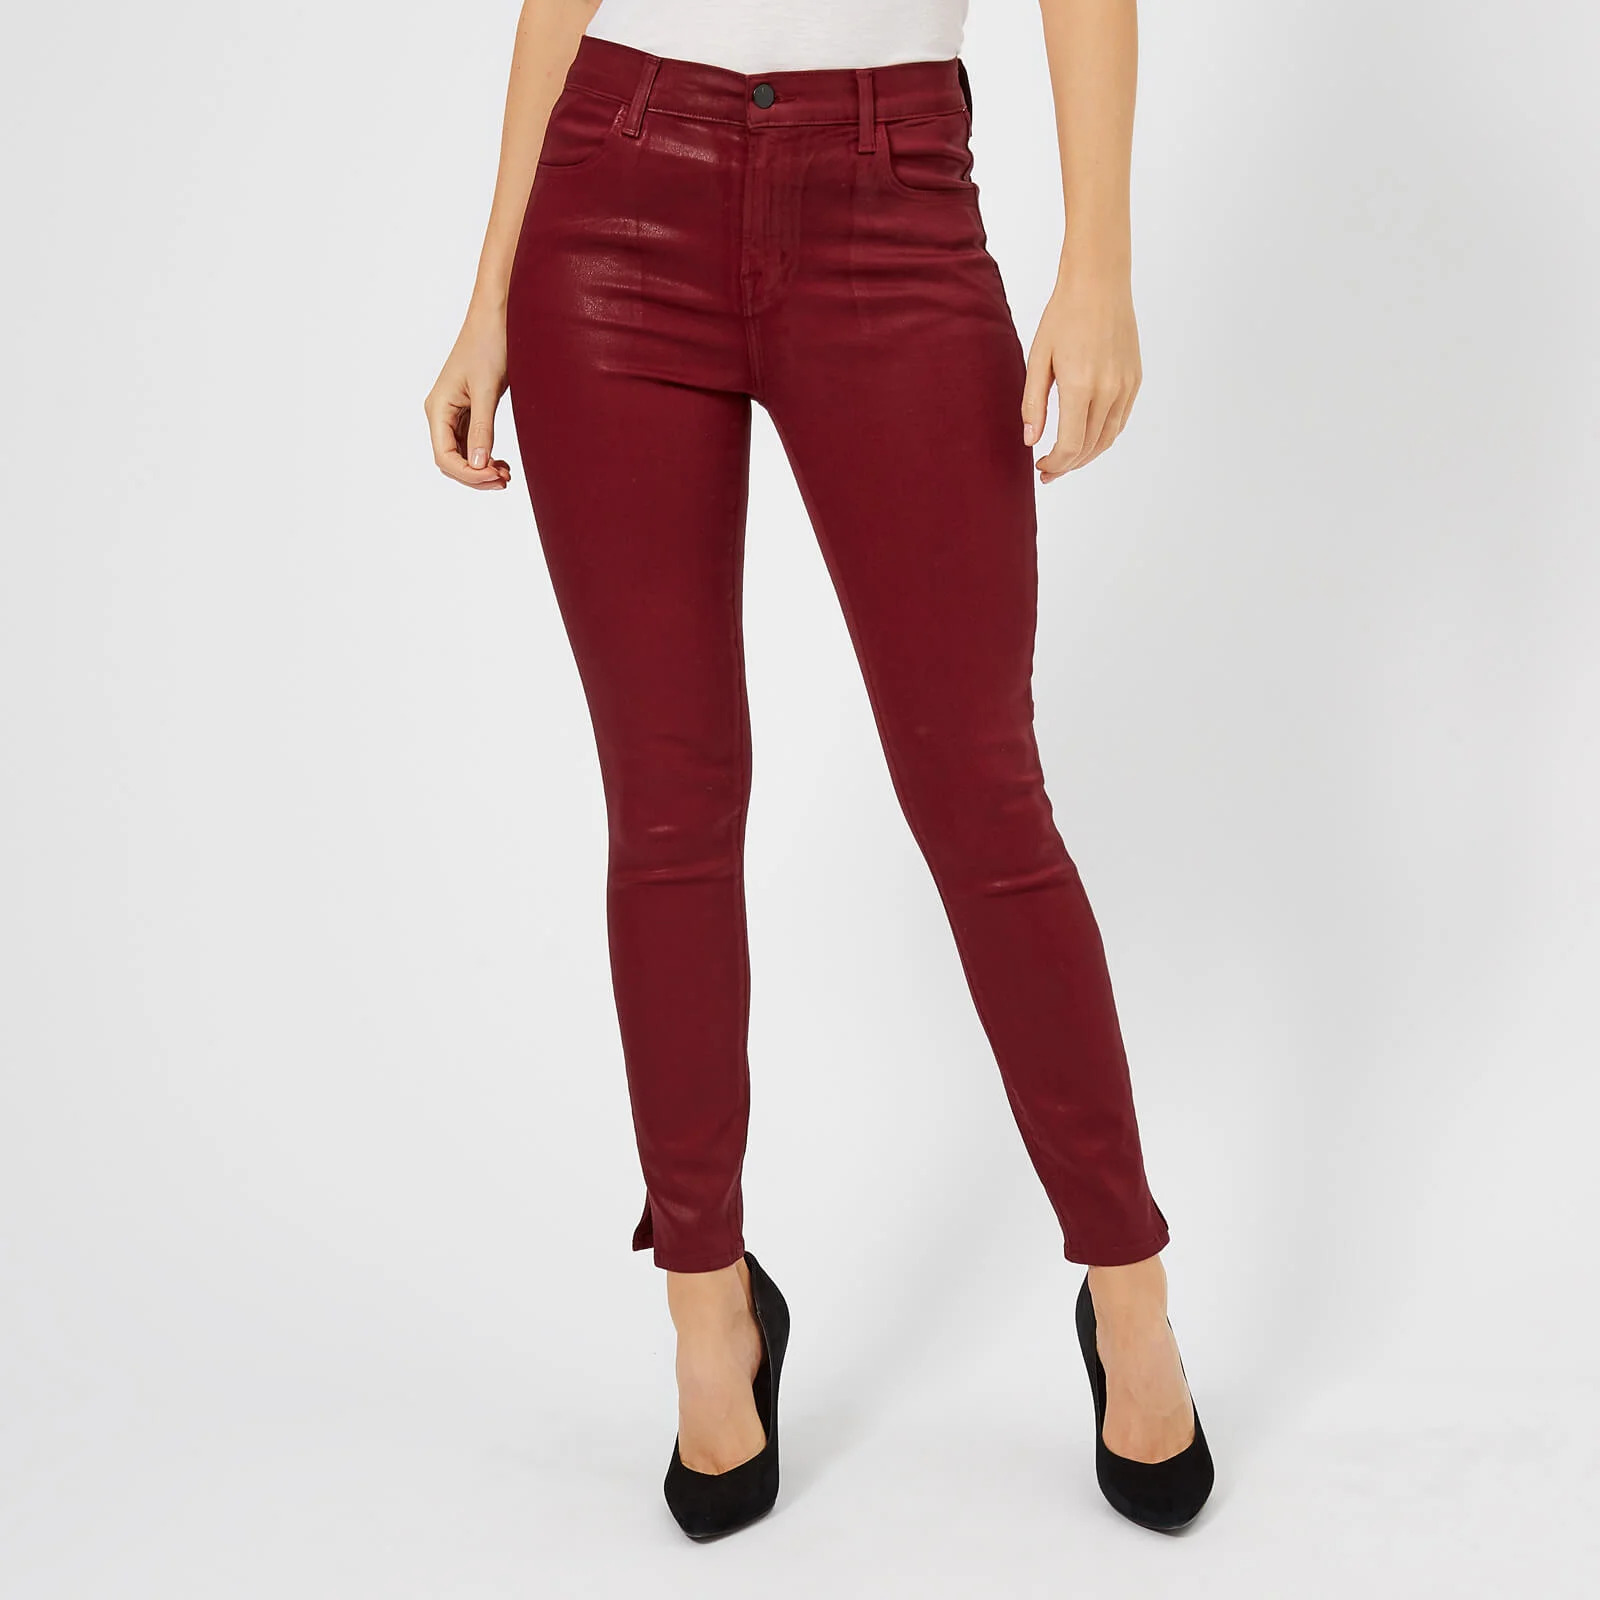 J Brand Women's Alana High Rise Crop Skinny Jeans - Oxblood Image 1